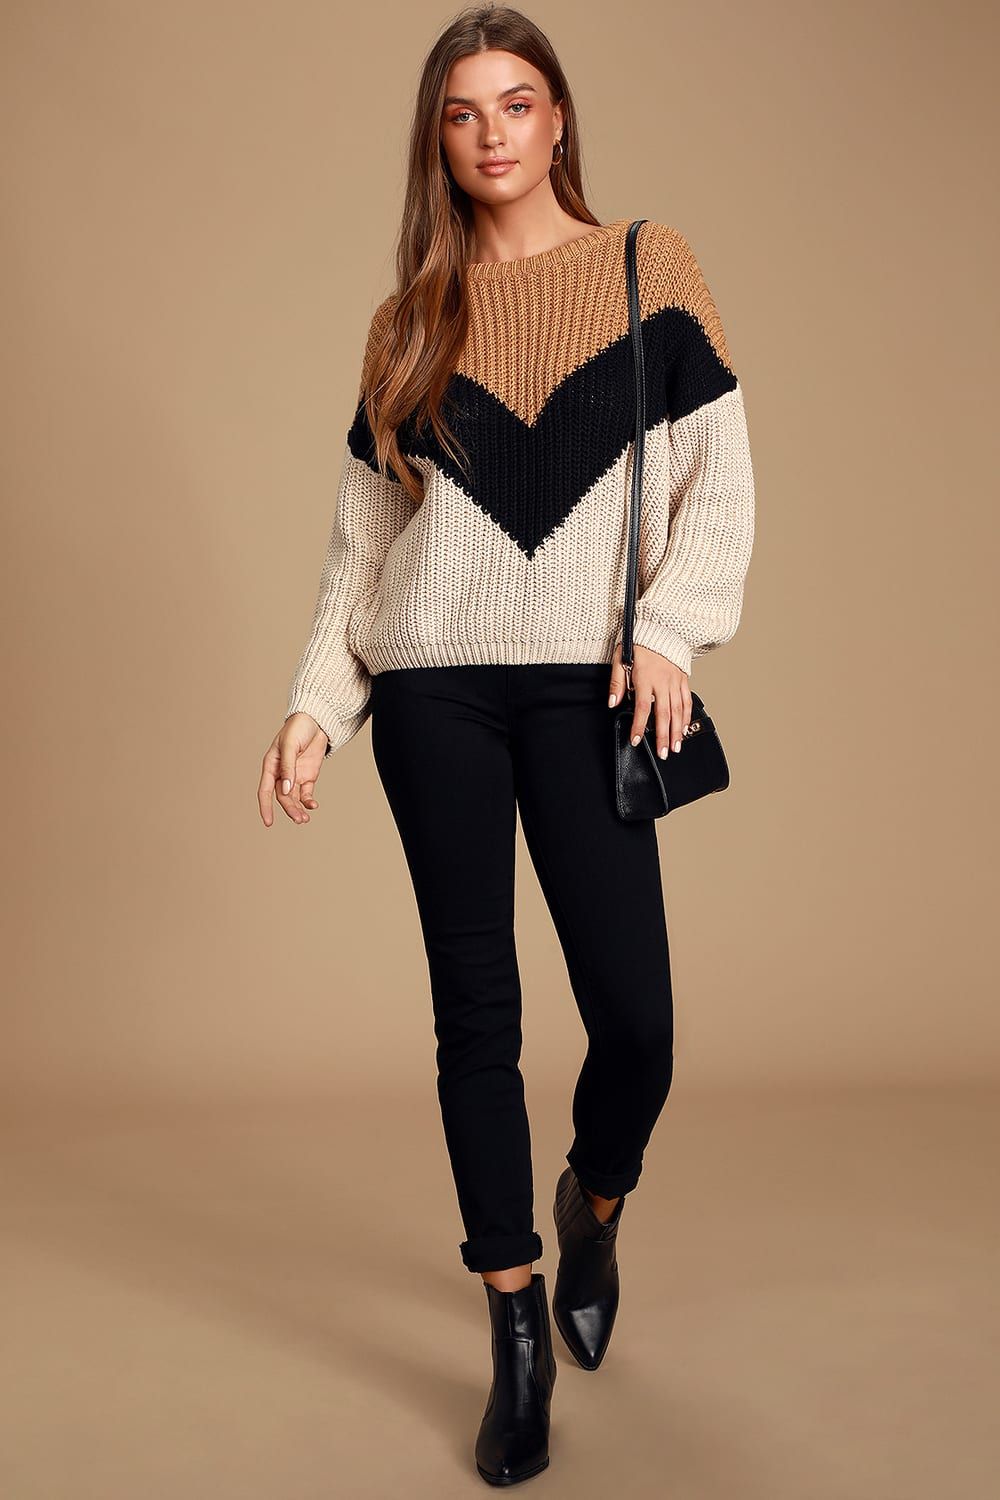 Autumn Leaves Tan Multi Chevron Stripe Knit Sweater | Lulus (US)